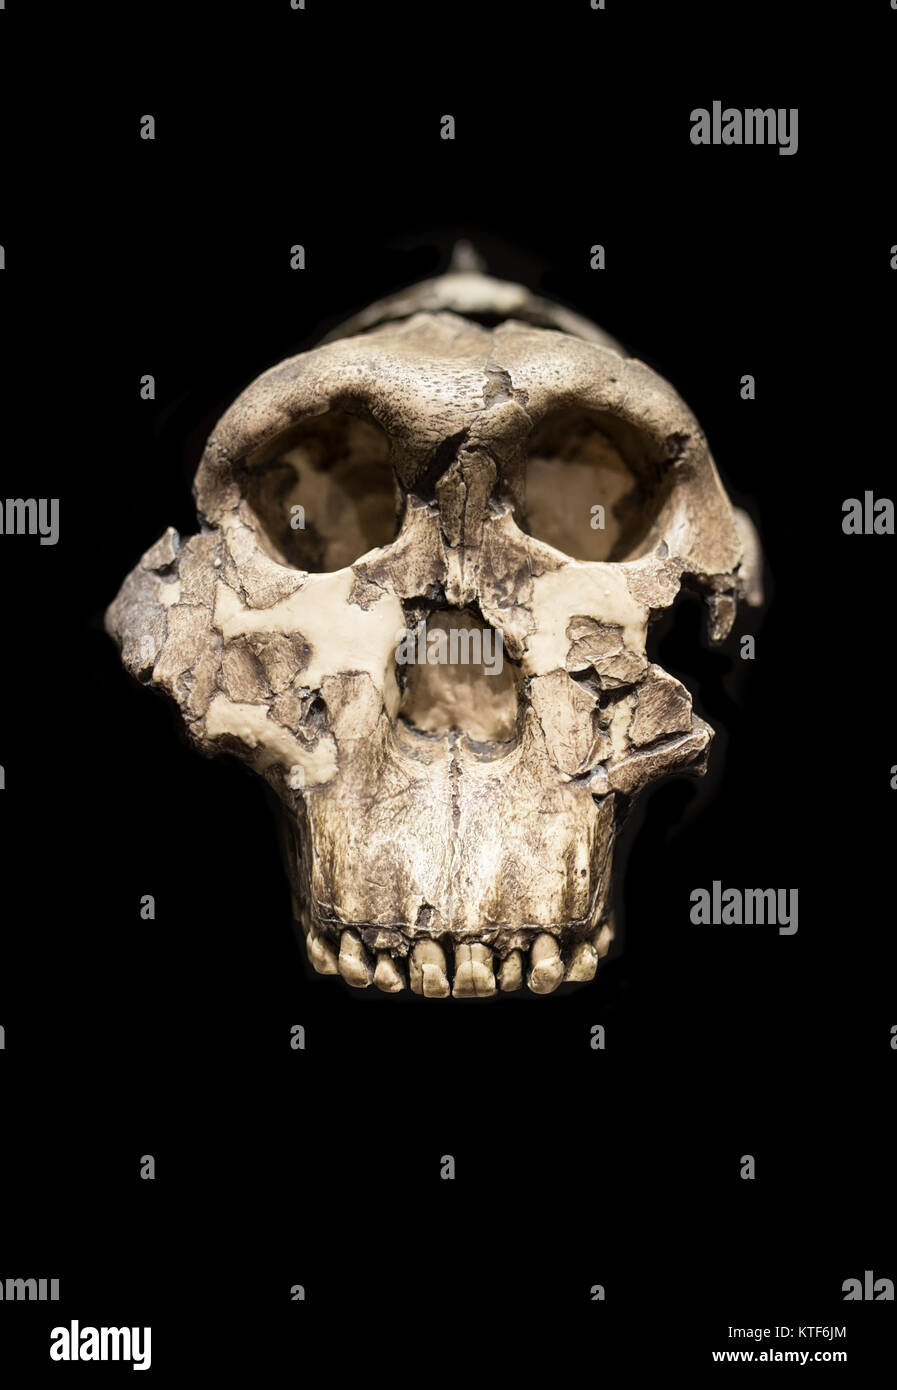 Madrid, Spagna - 11 Novembre 2017: maschio adulto cranuim di Paranthropus boisei o Australopithecus bosei. Chiamato anche OH 5. Zinj. Caro ragazzo. Nutcrakerman Foto Stock